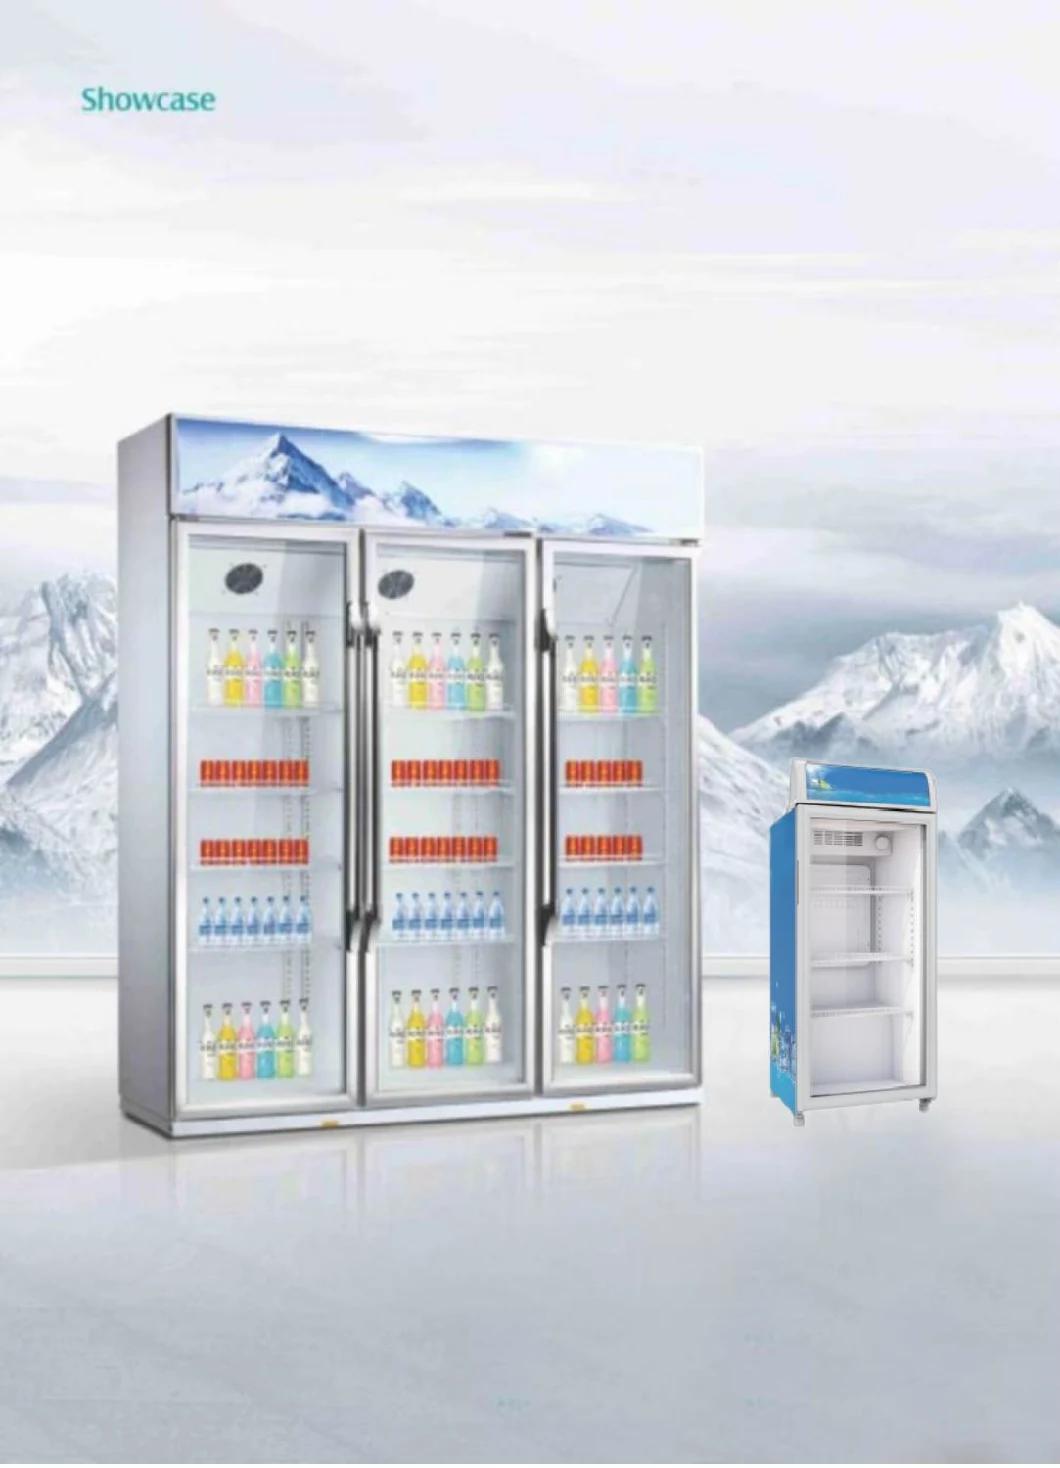 ODM Hot Selling Direct Cooling Freezer Display Vertical Cold Drink Refrigerator Single Door Showcase